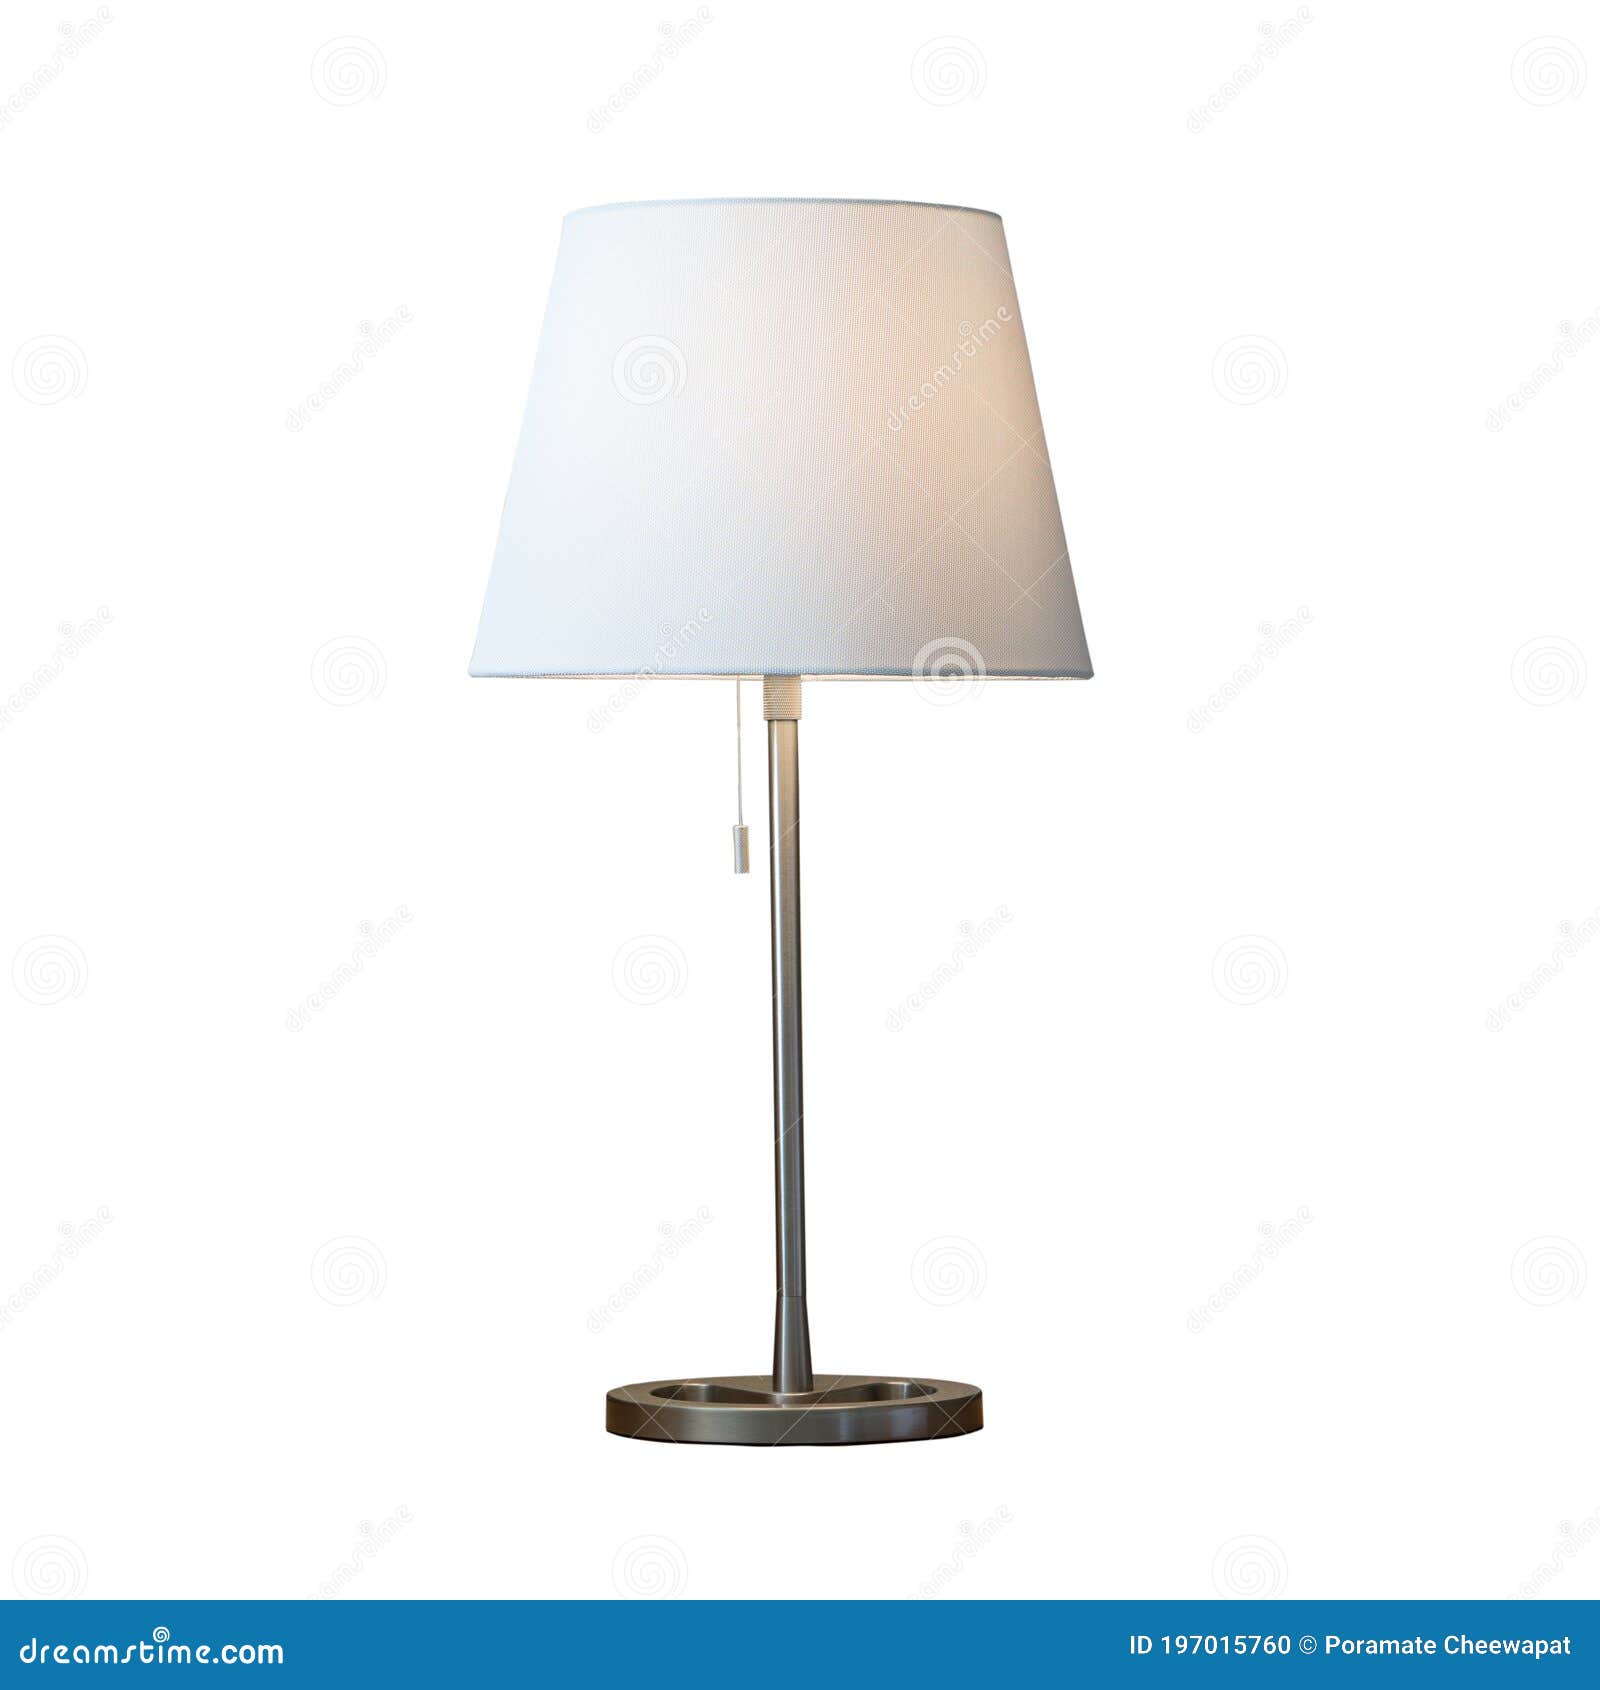 Modern White Lamp Isolated on White Background Stock Photo - Image of ...